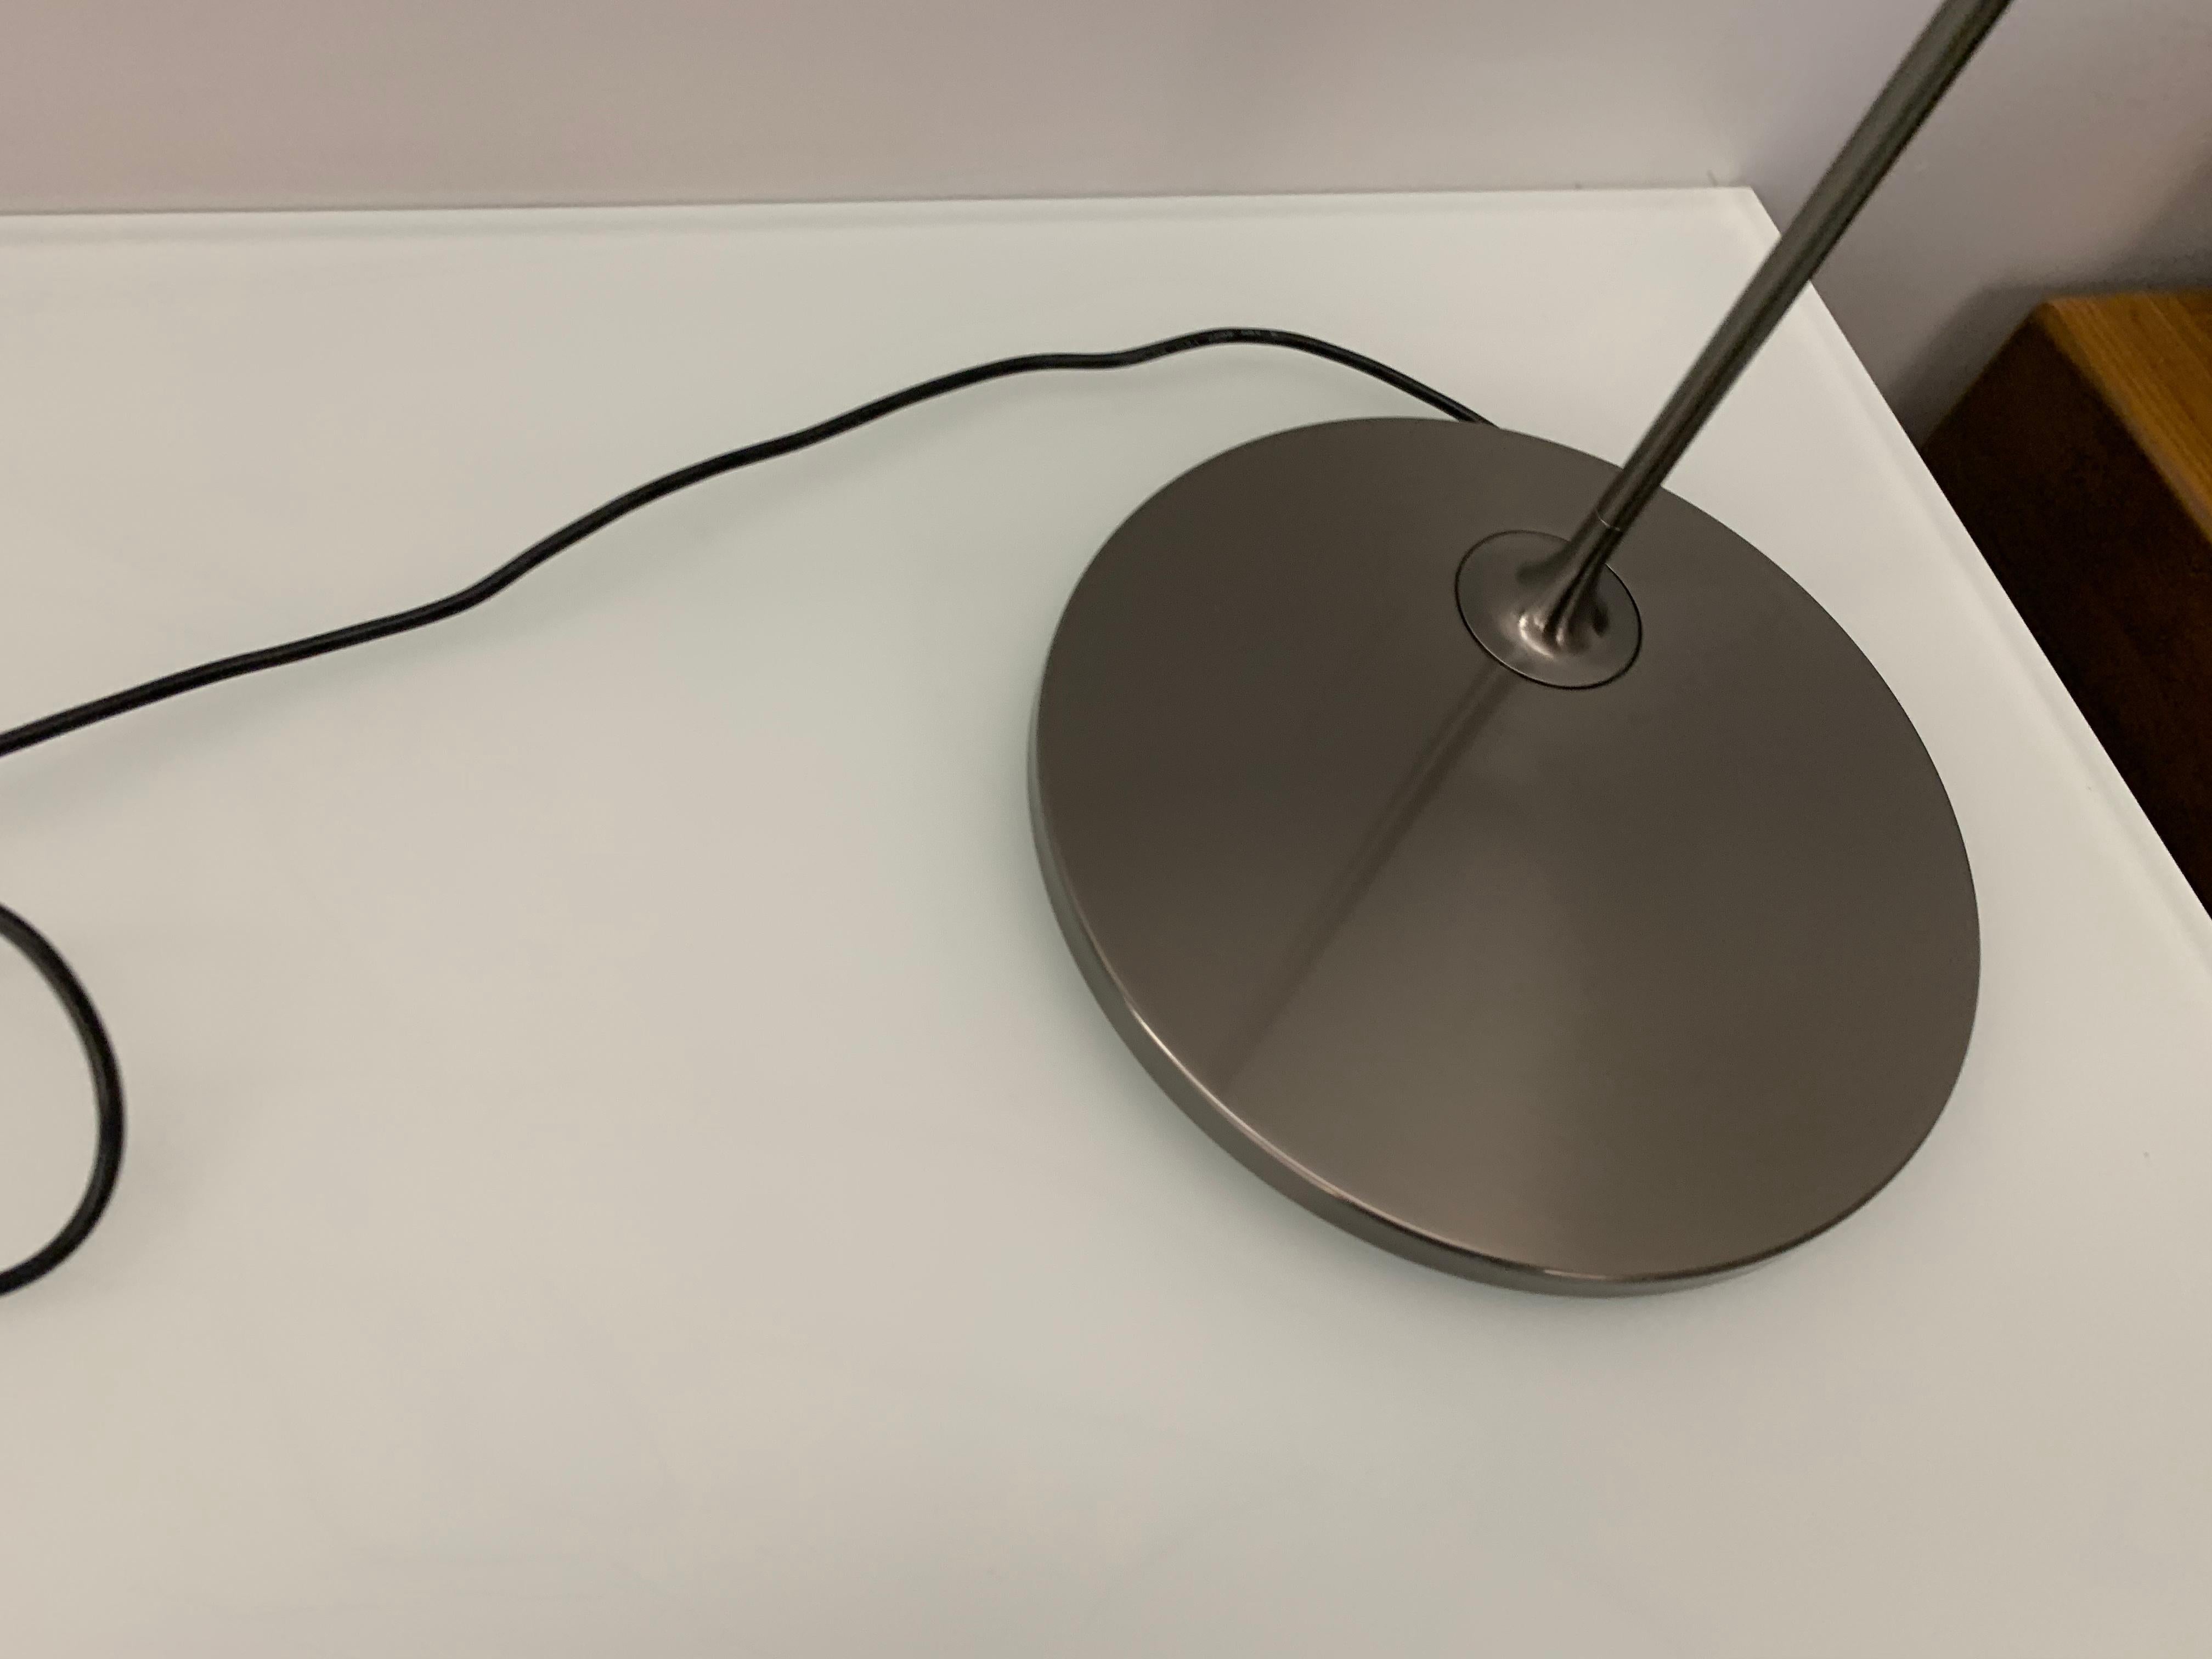 Italian Lumina Flo Desk Lamp in Metallic Bronze by Foster and Partners